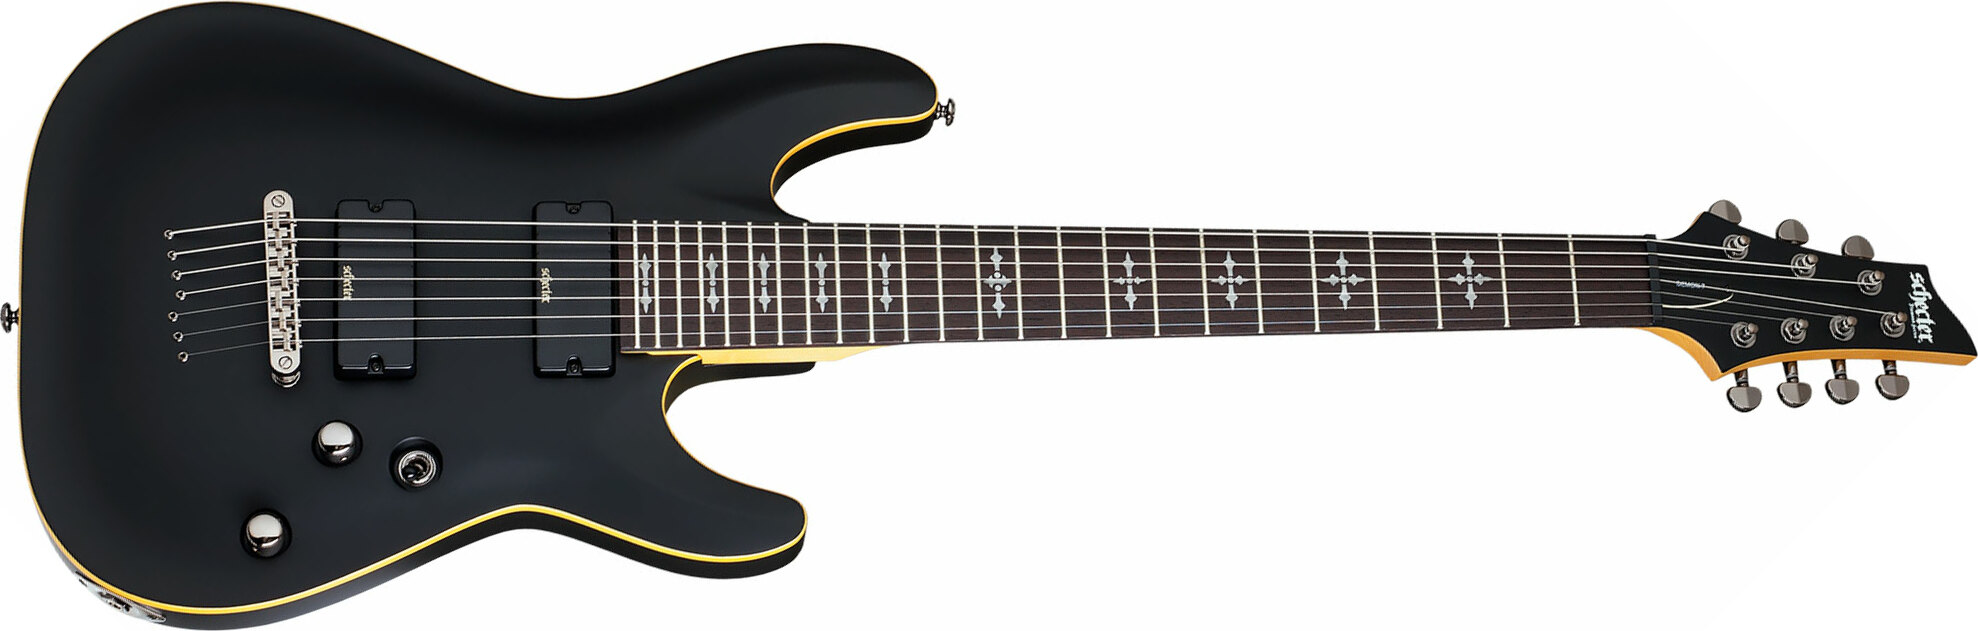 Schecter Demon-7 7c 2h Ht Wen - Aged Black Satin - 7 string electric guitar - Main picture